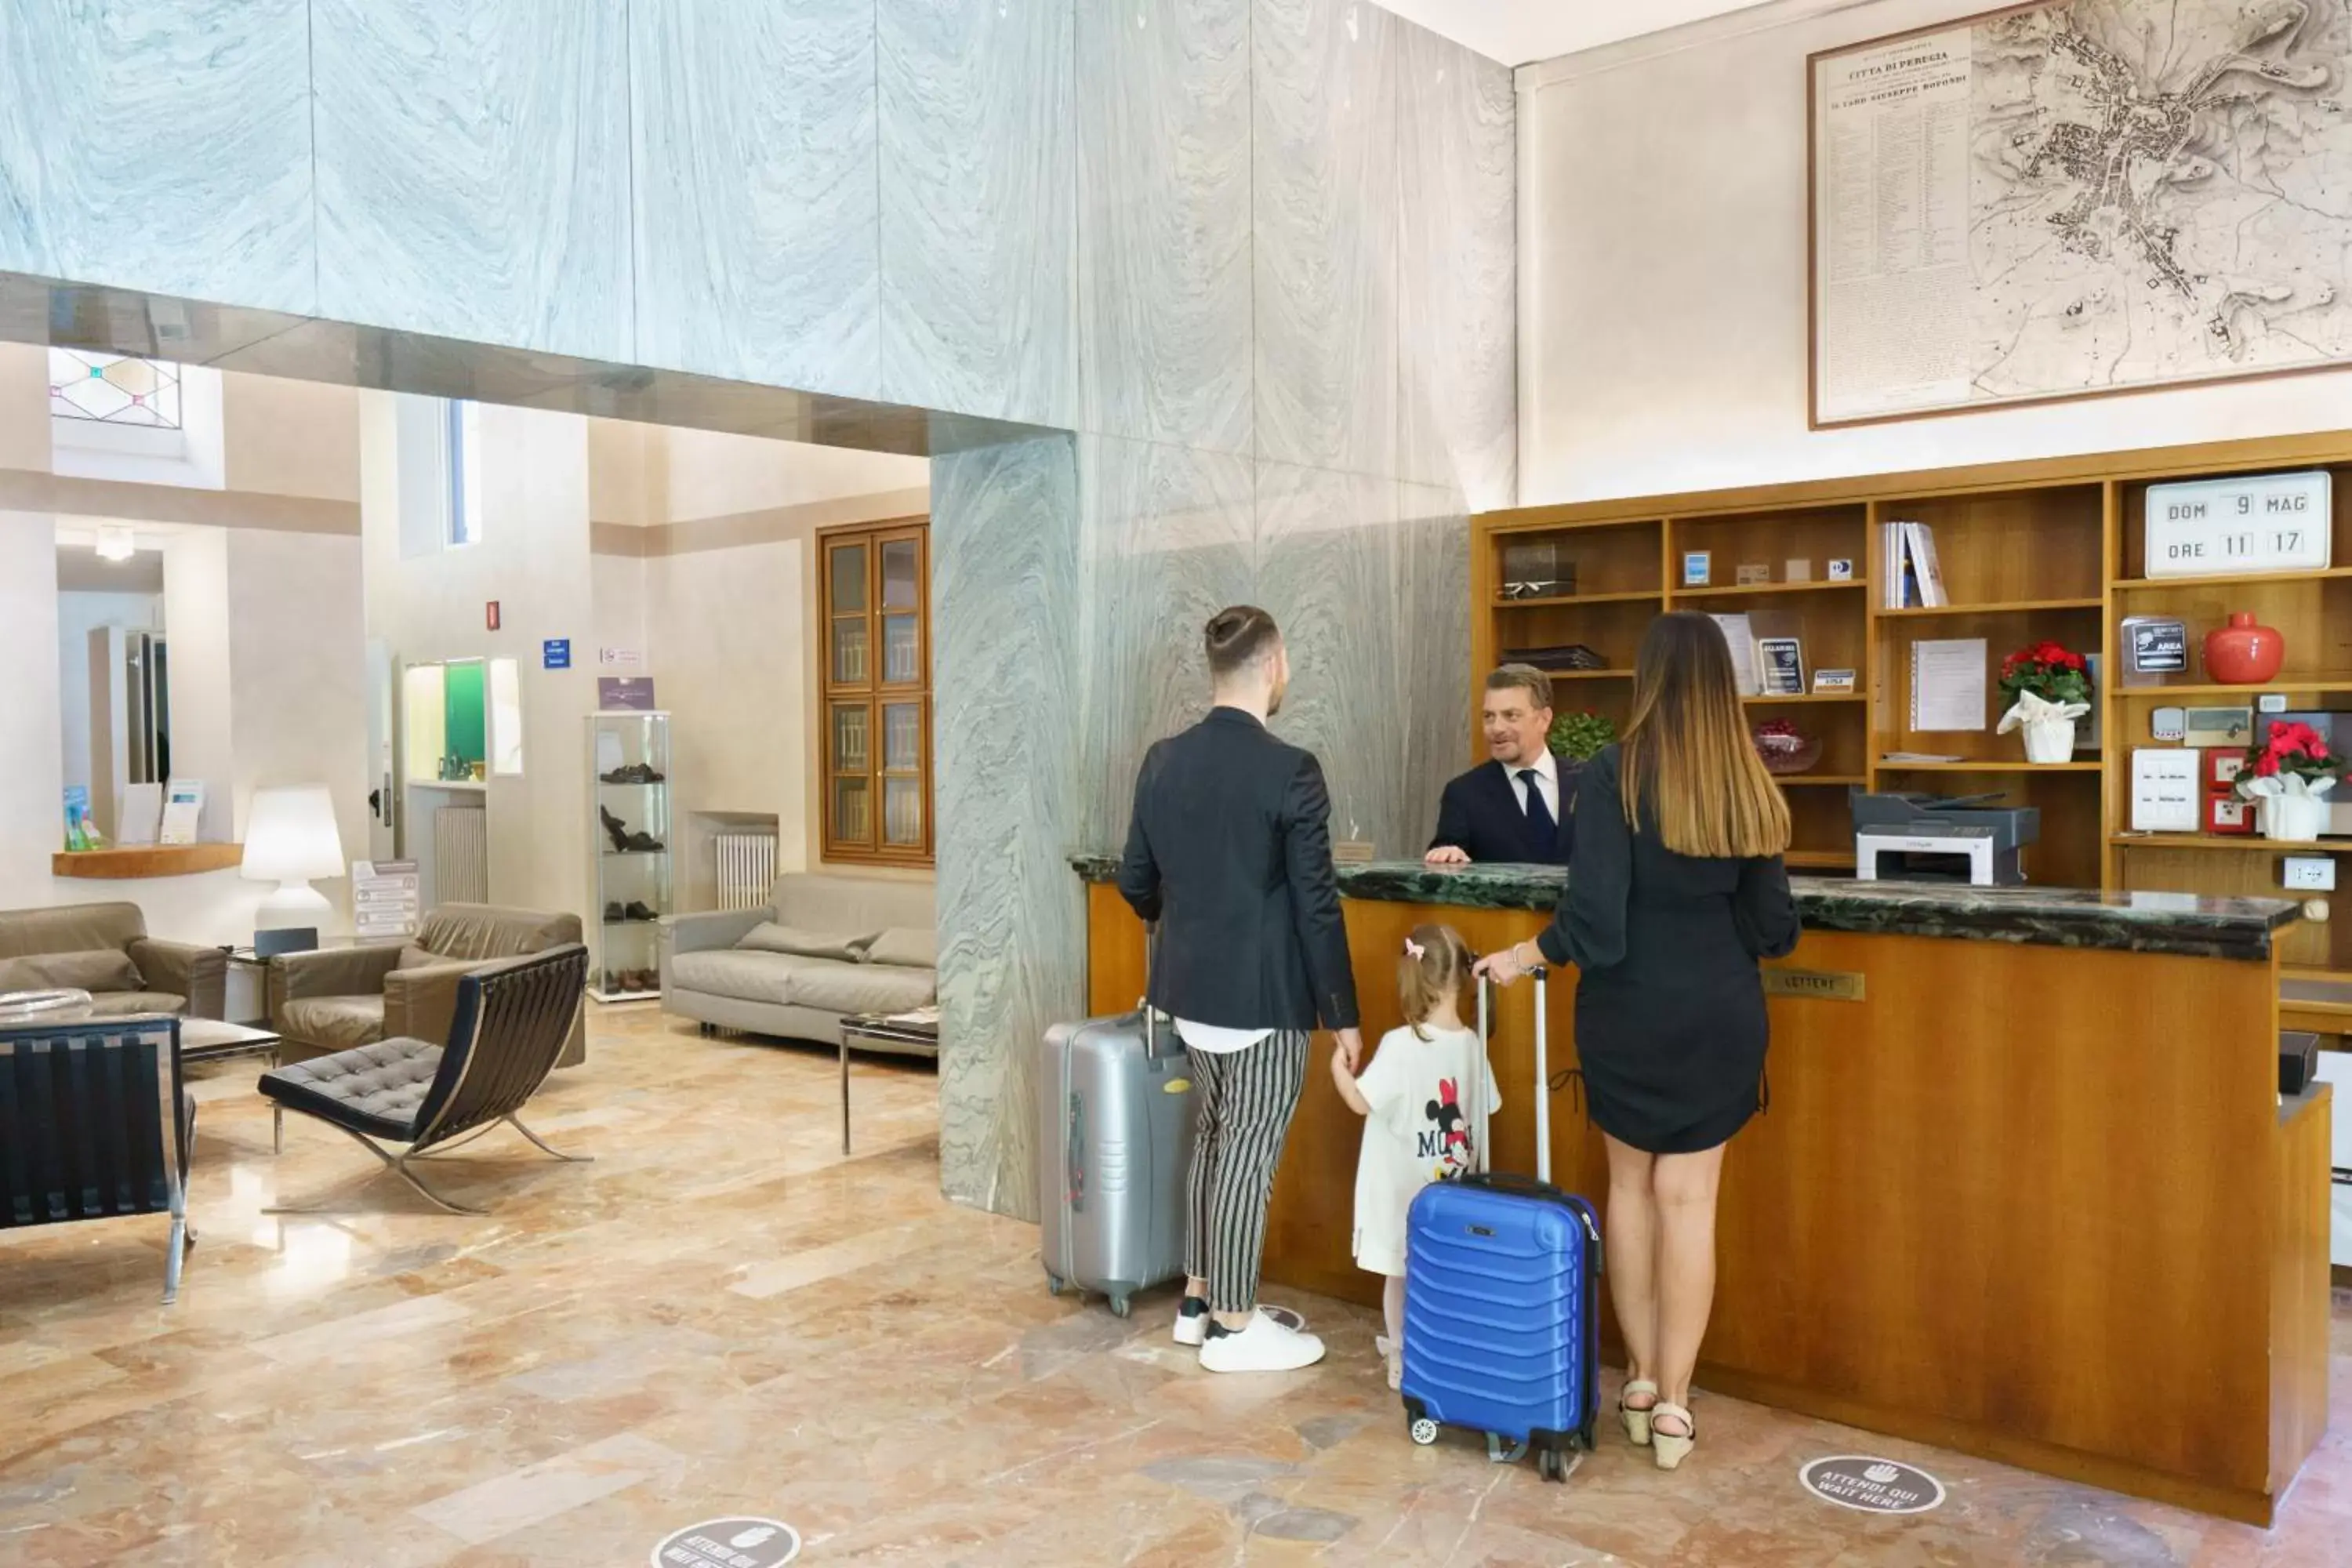 Lobby or reception in Hotel La Rosetta